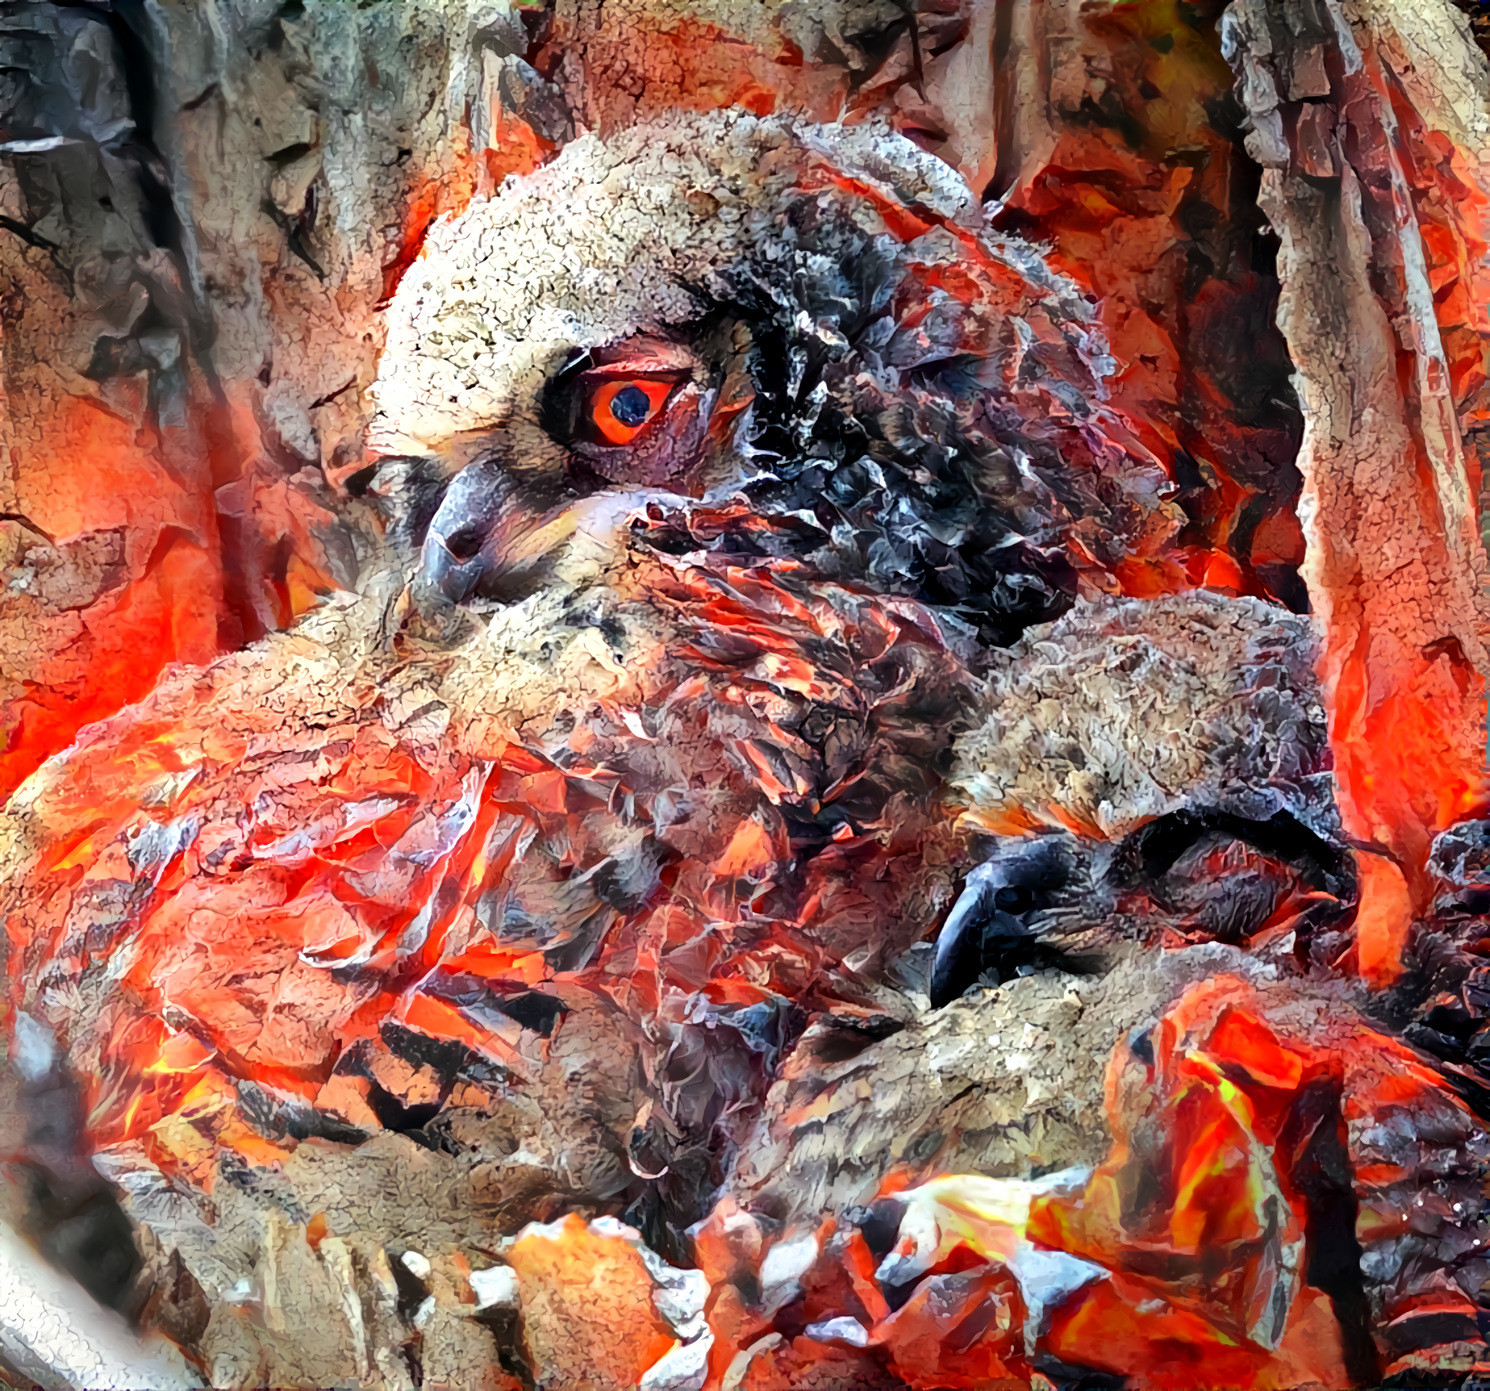 Owl on Fire